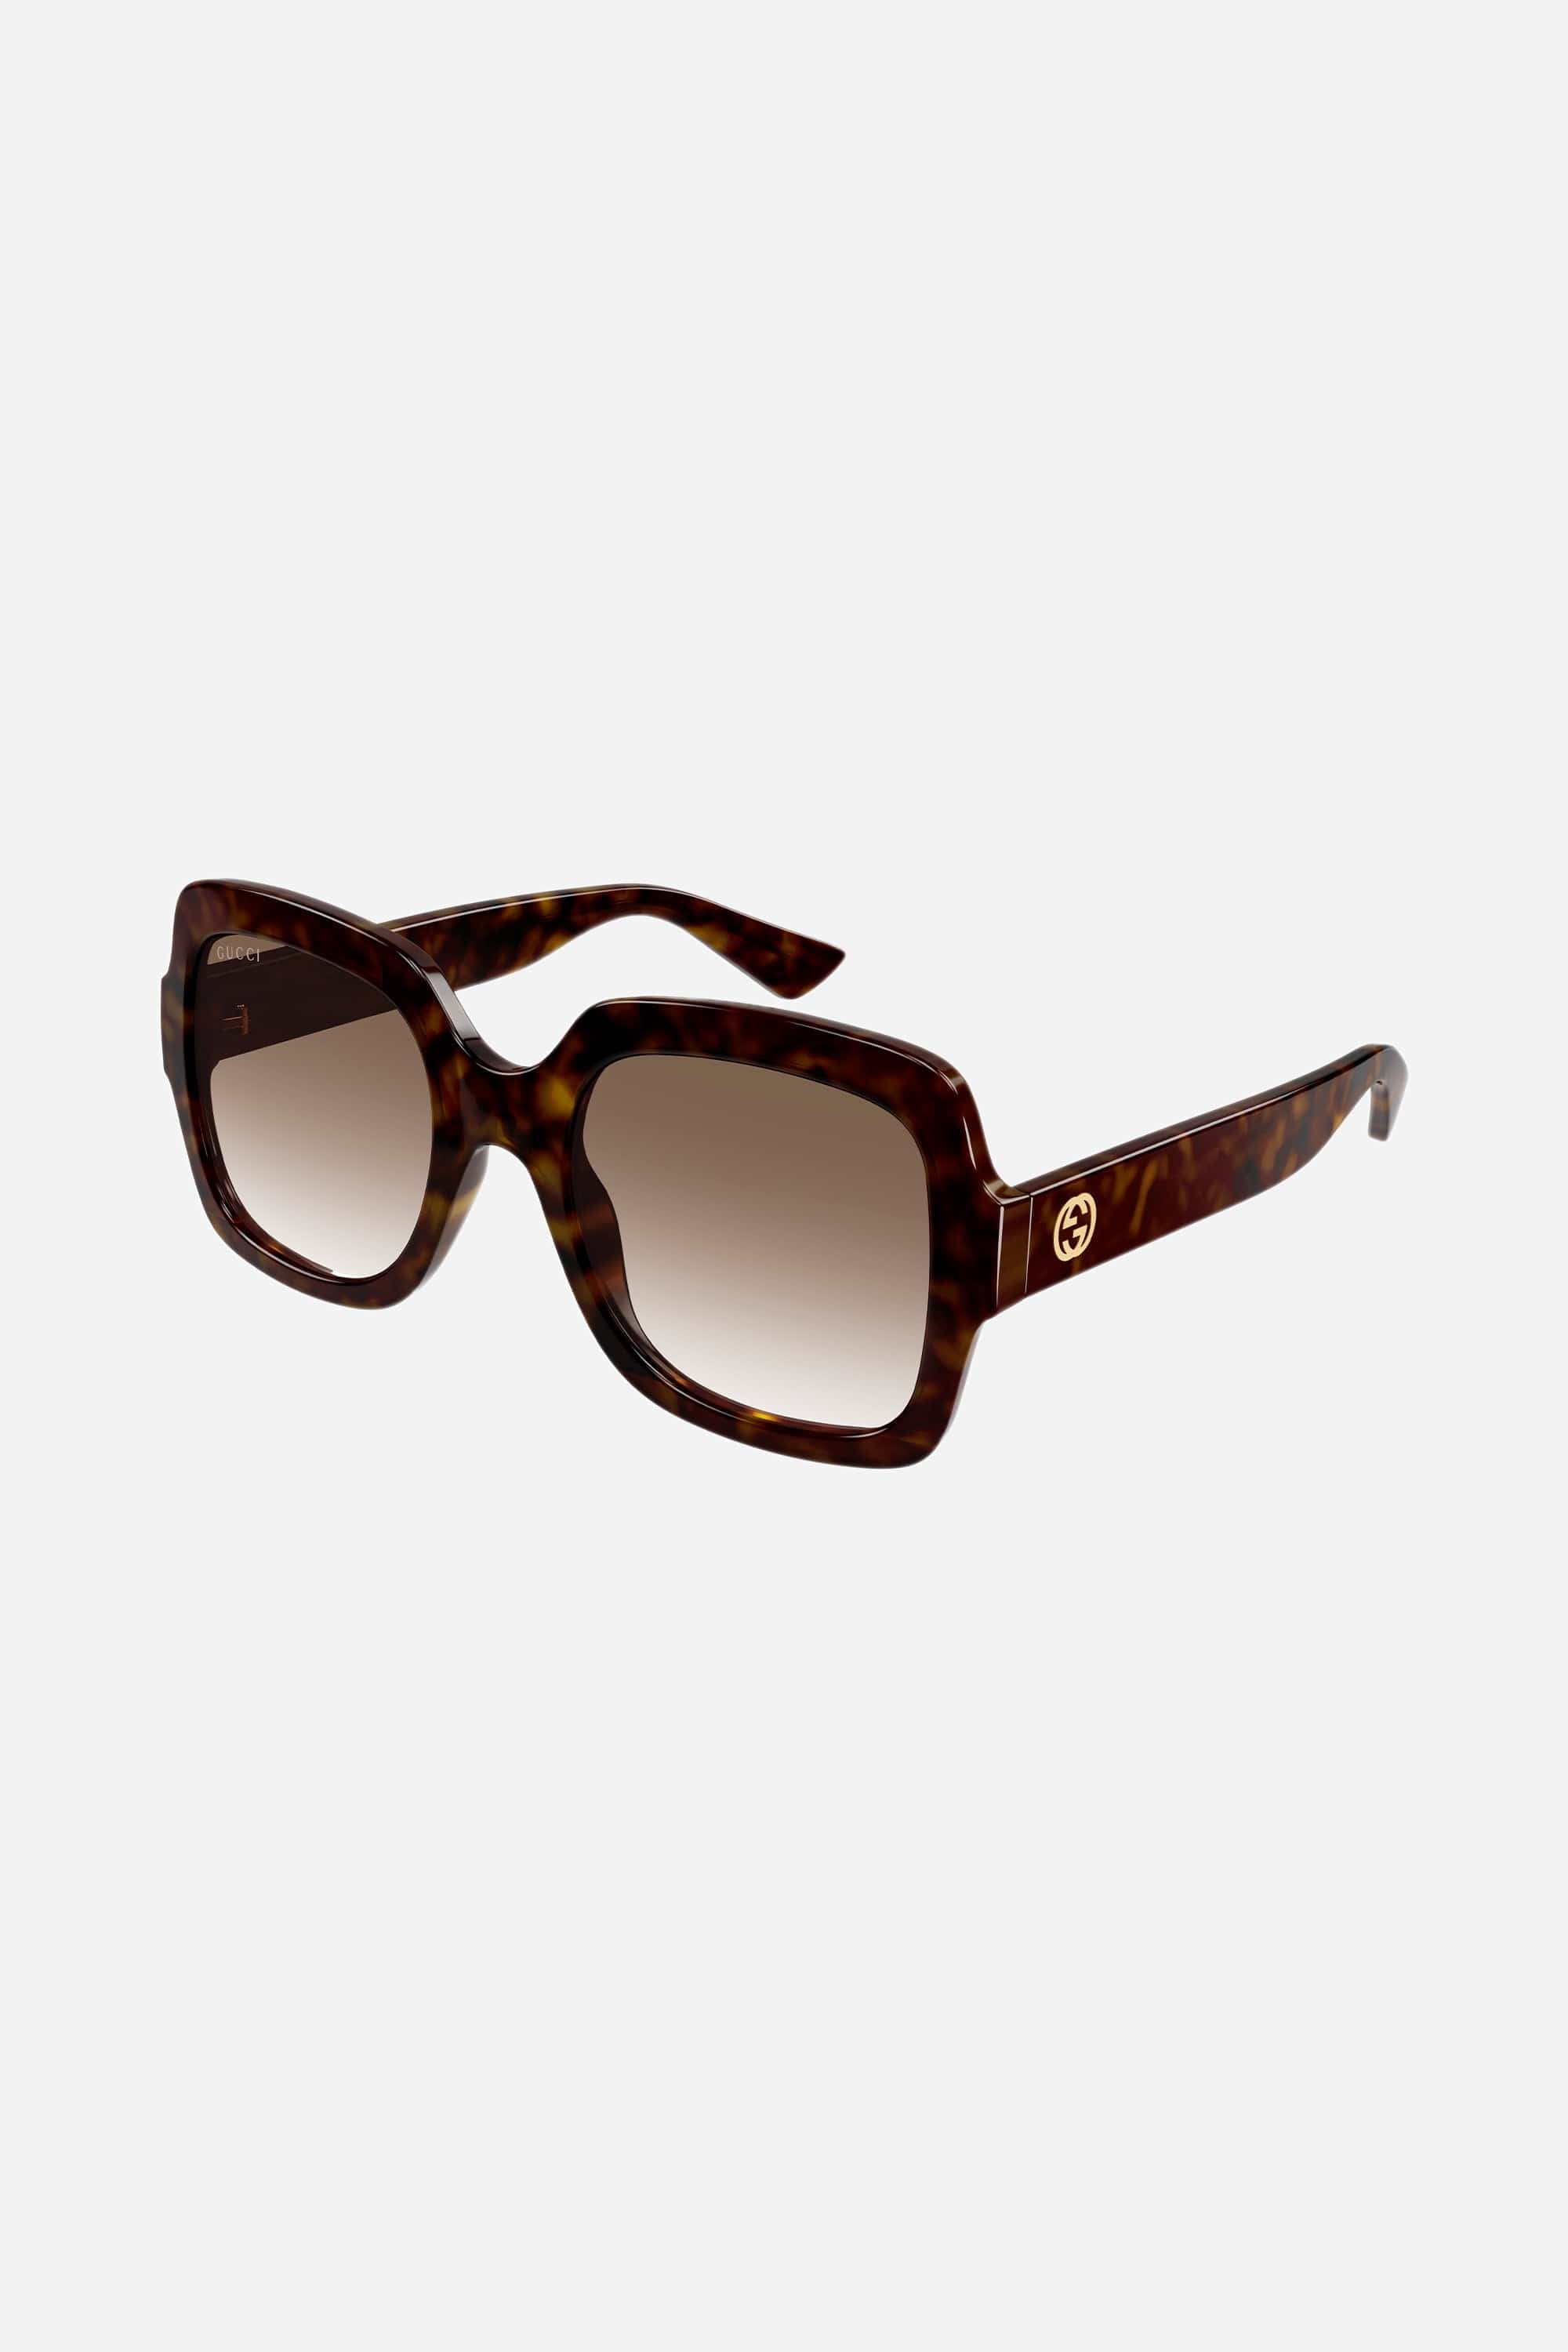 Gucci squared brown thin acetate sunglasses - Eyewear Club